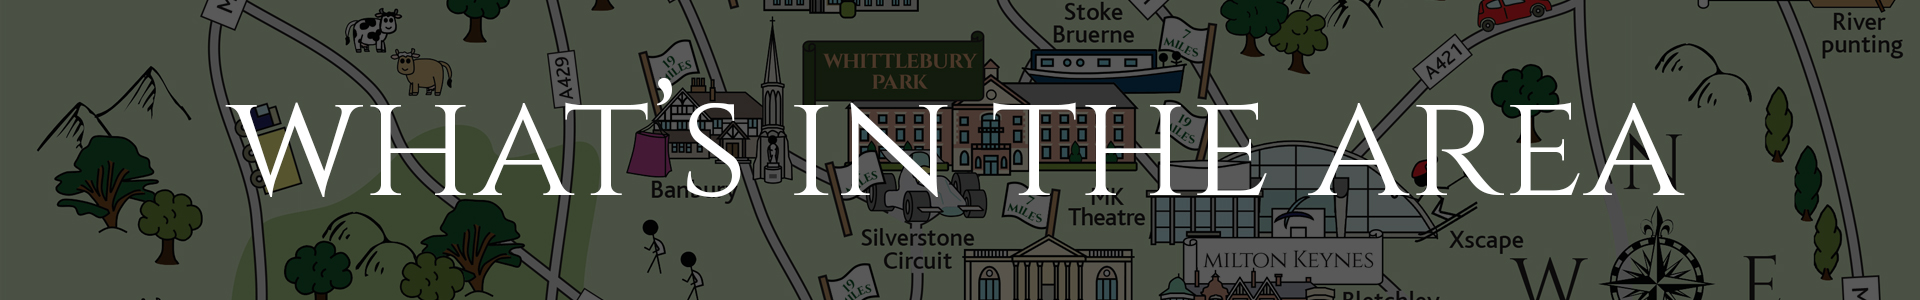 map of whittlebury park